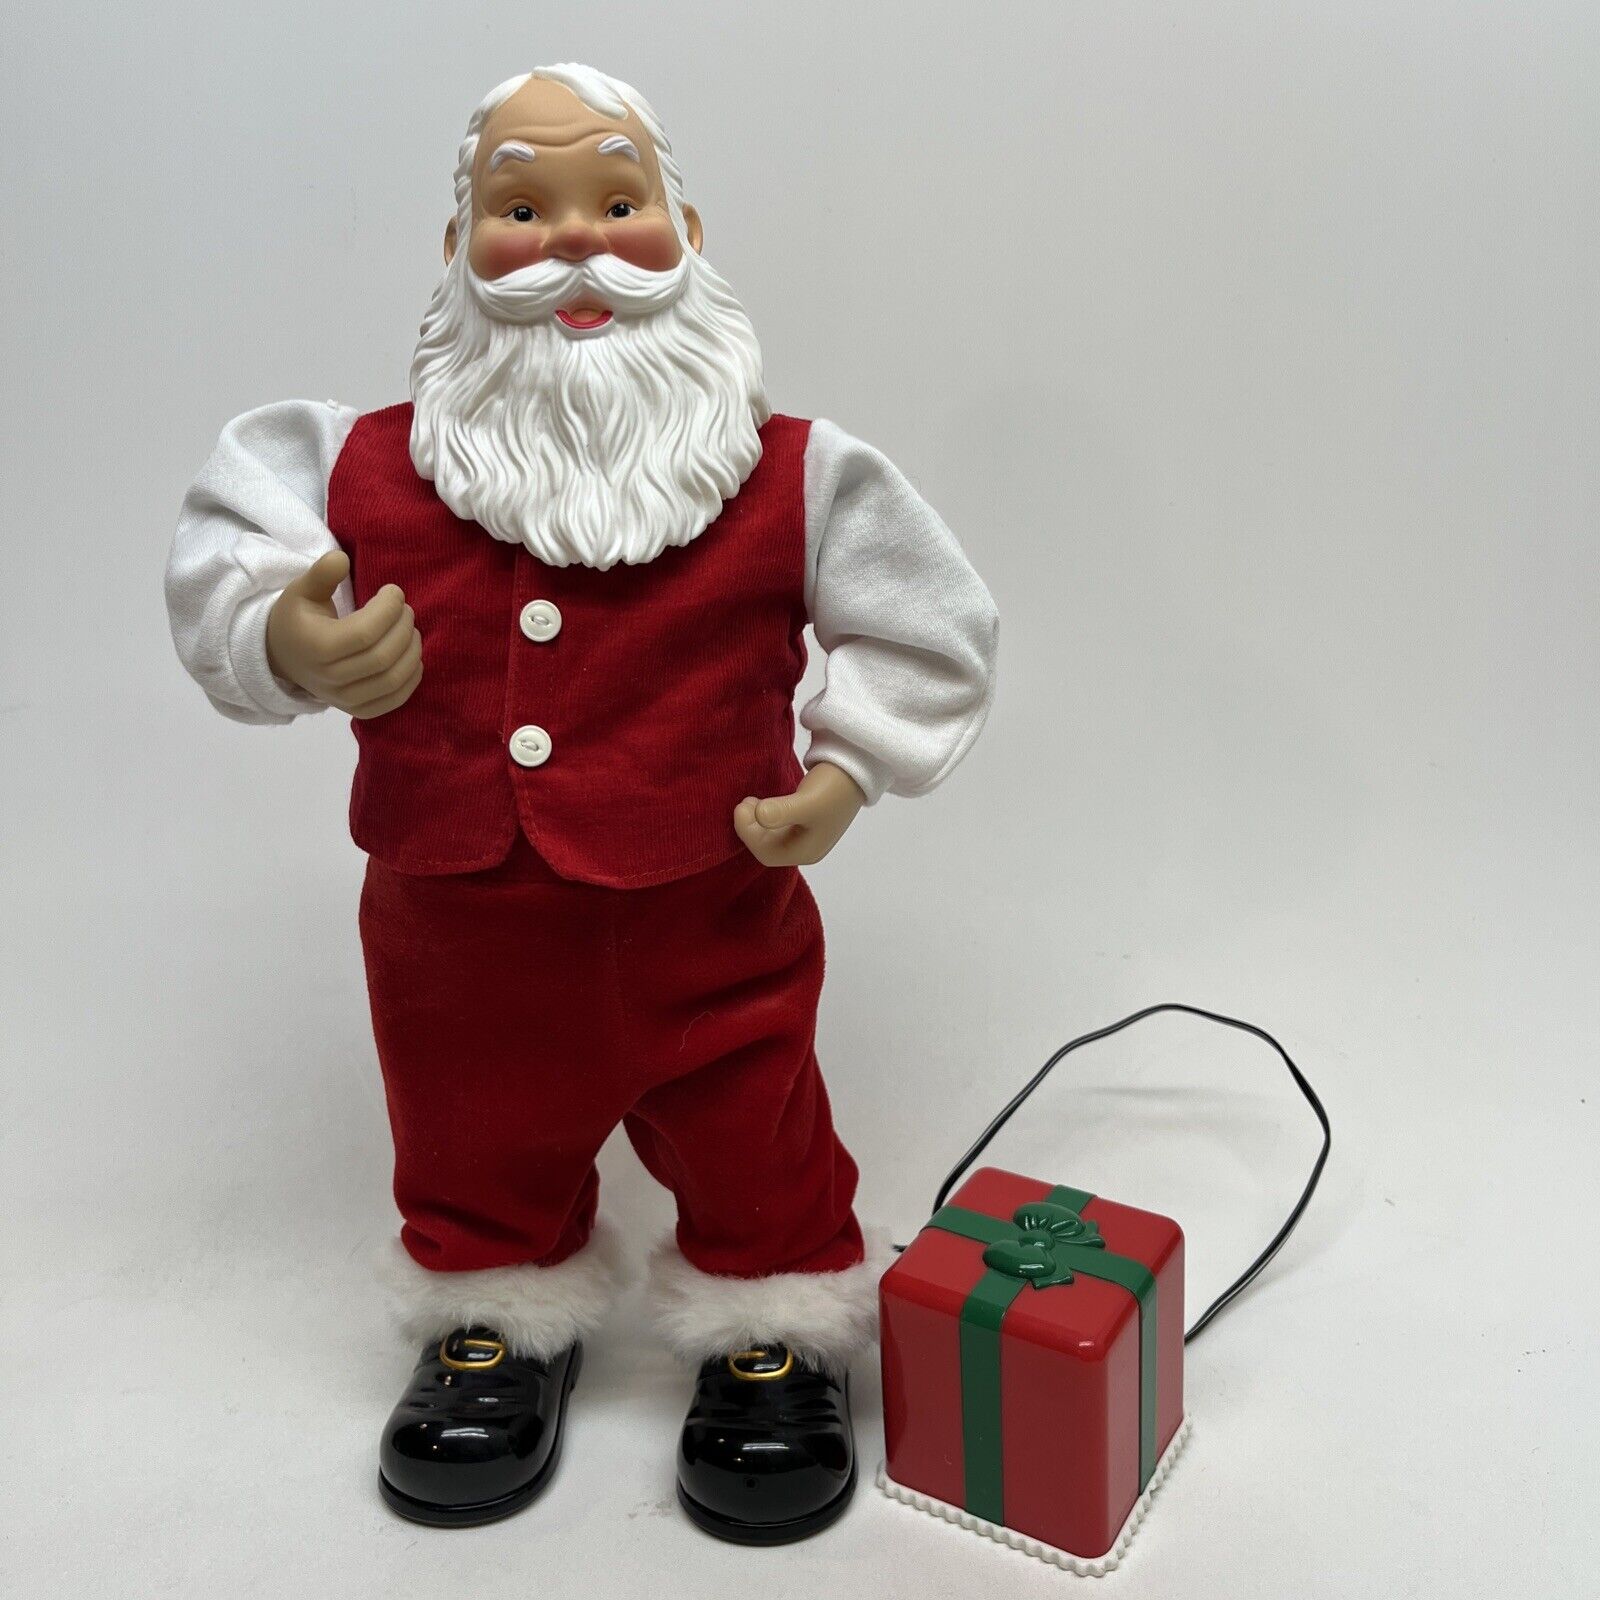 NOT WORKING Rockin’ Santa Animated Singing Dancing Animatronic 60-1190 Christmas